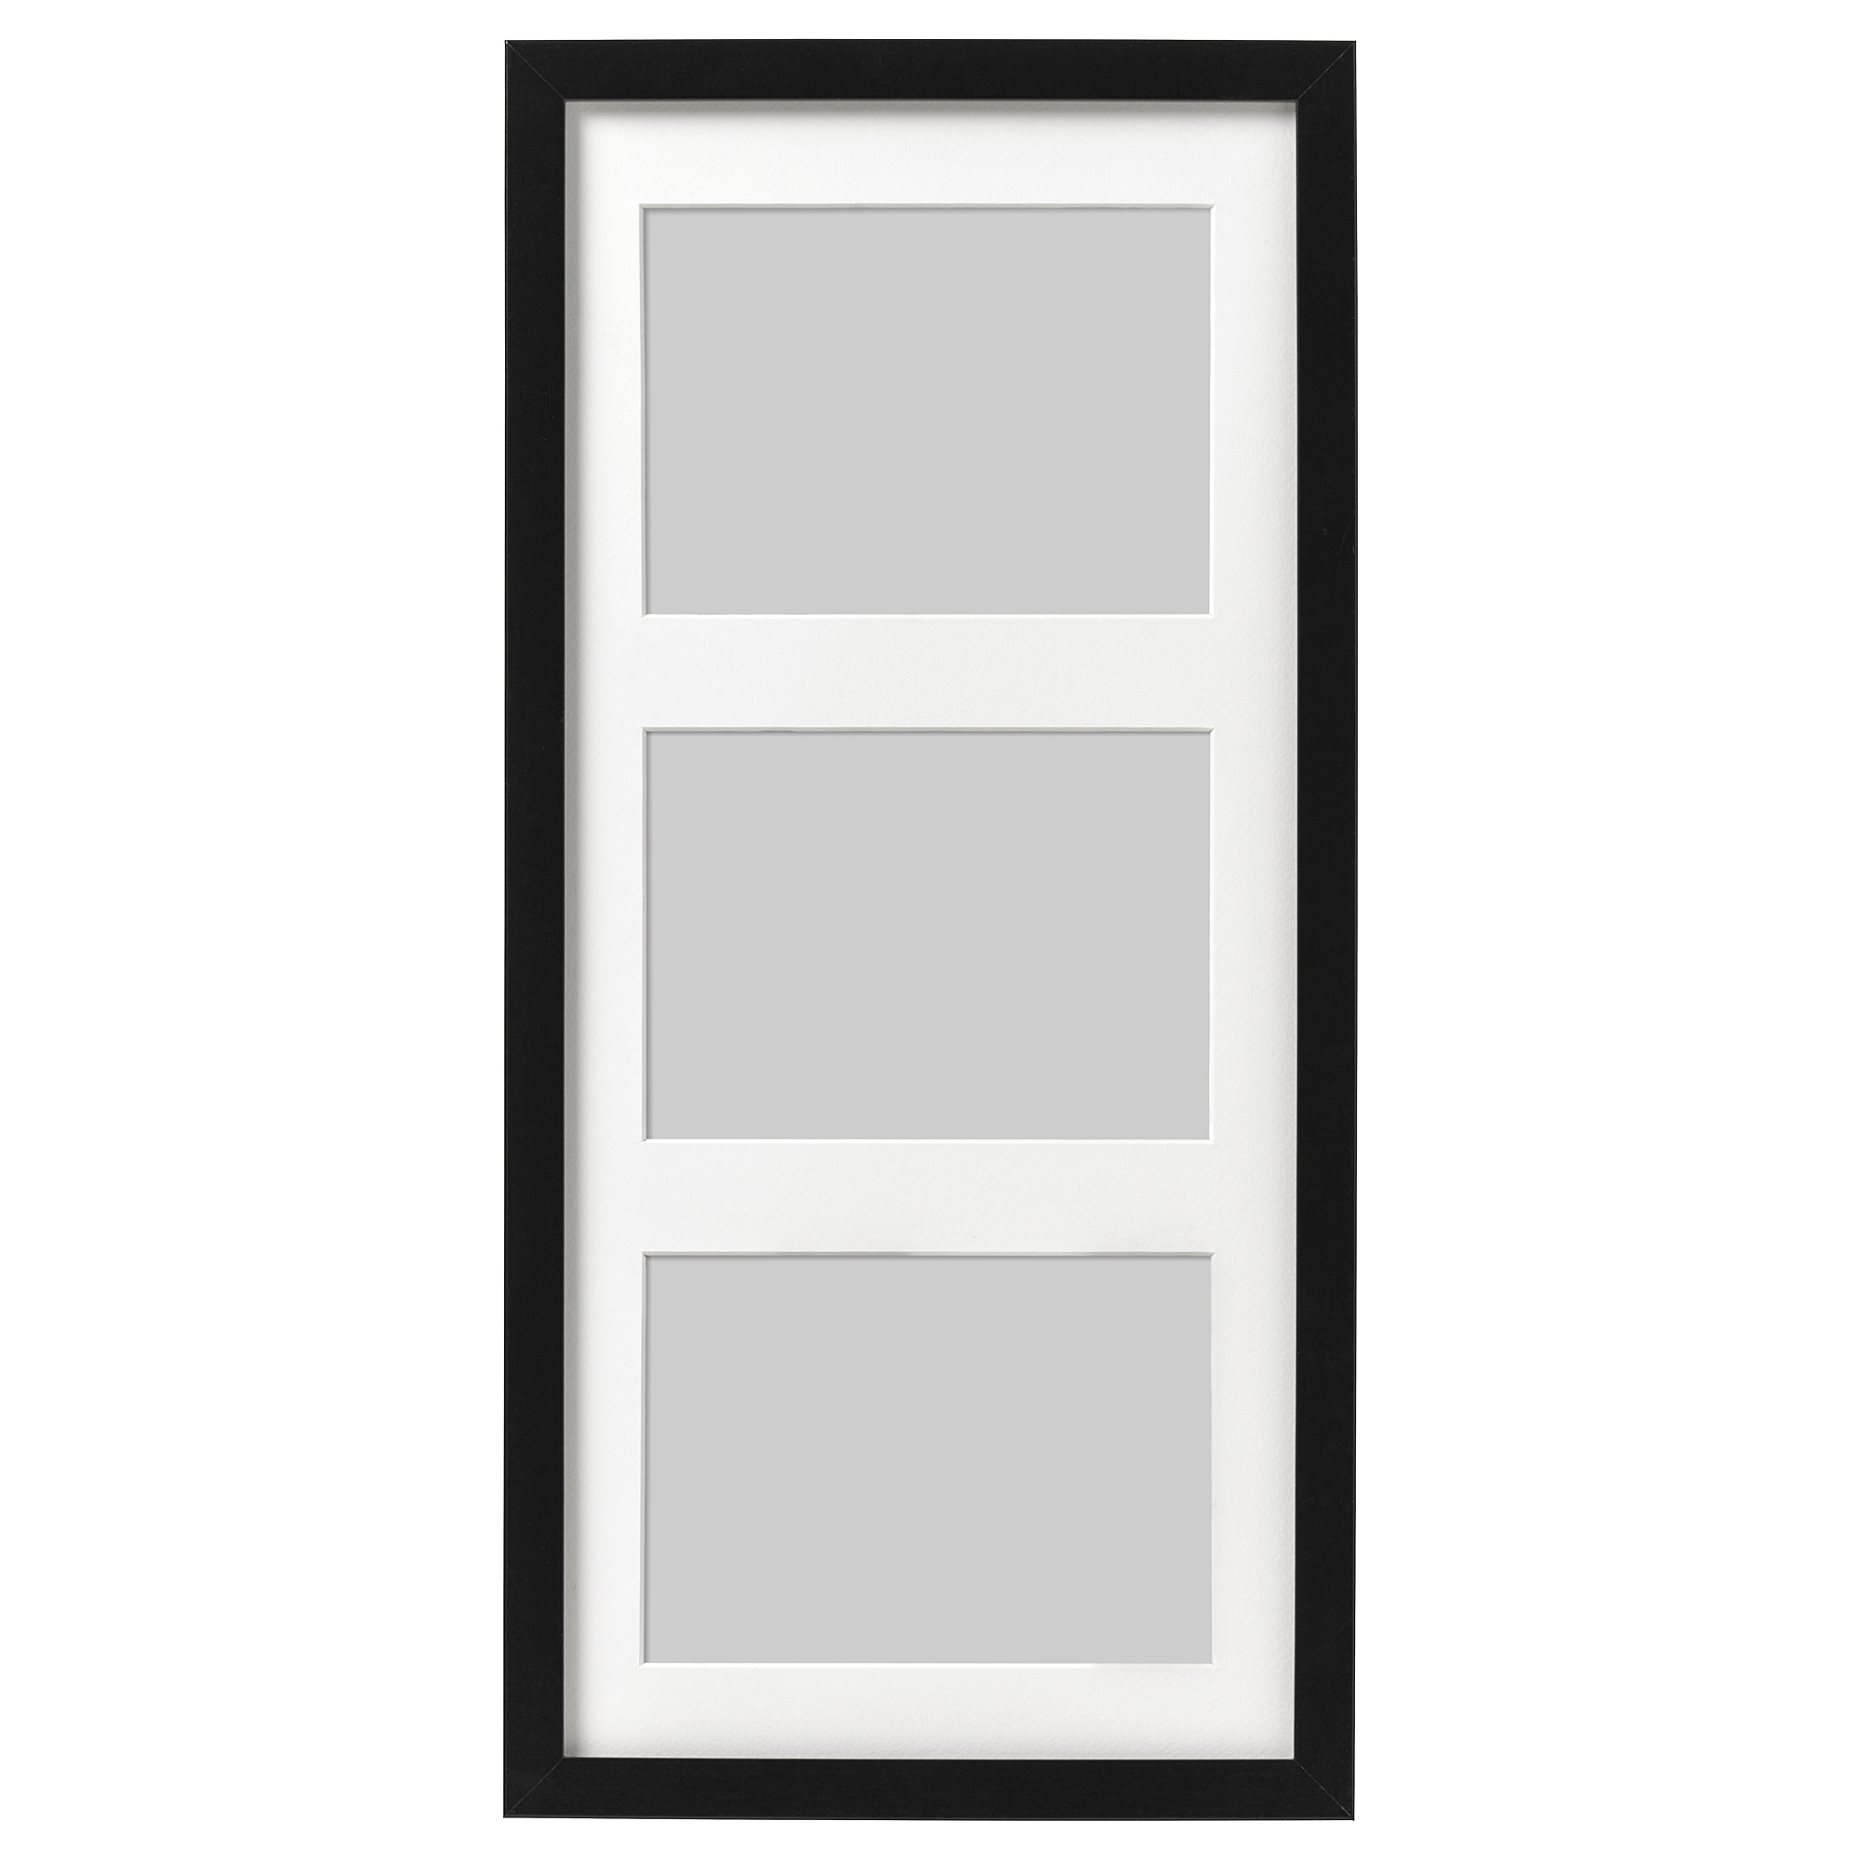 RIBBA, frame, 50x23 cm, 603.784.62